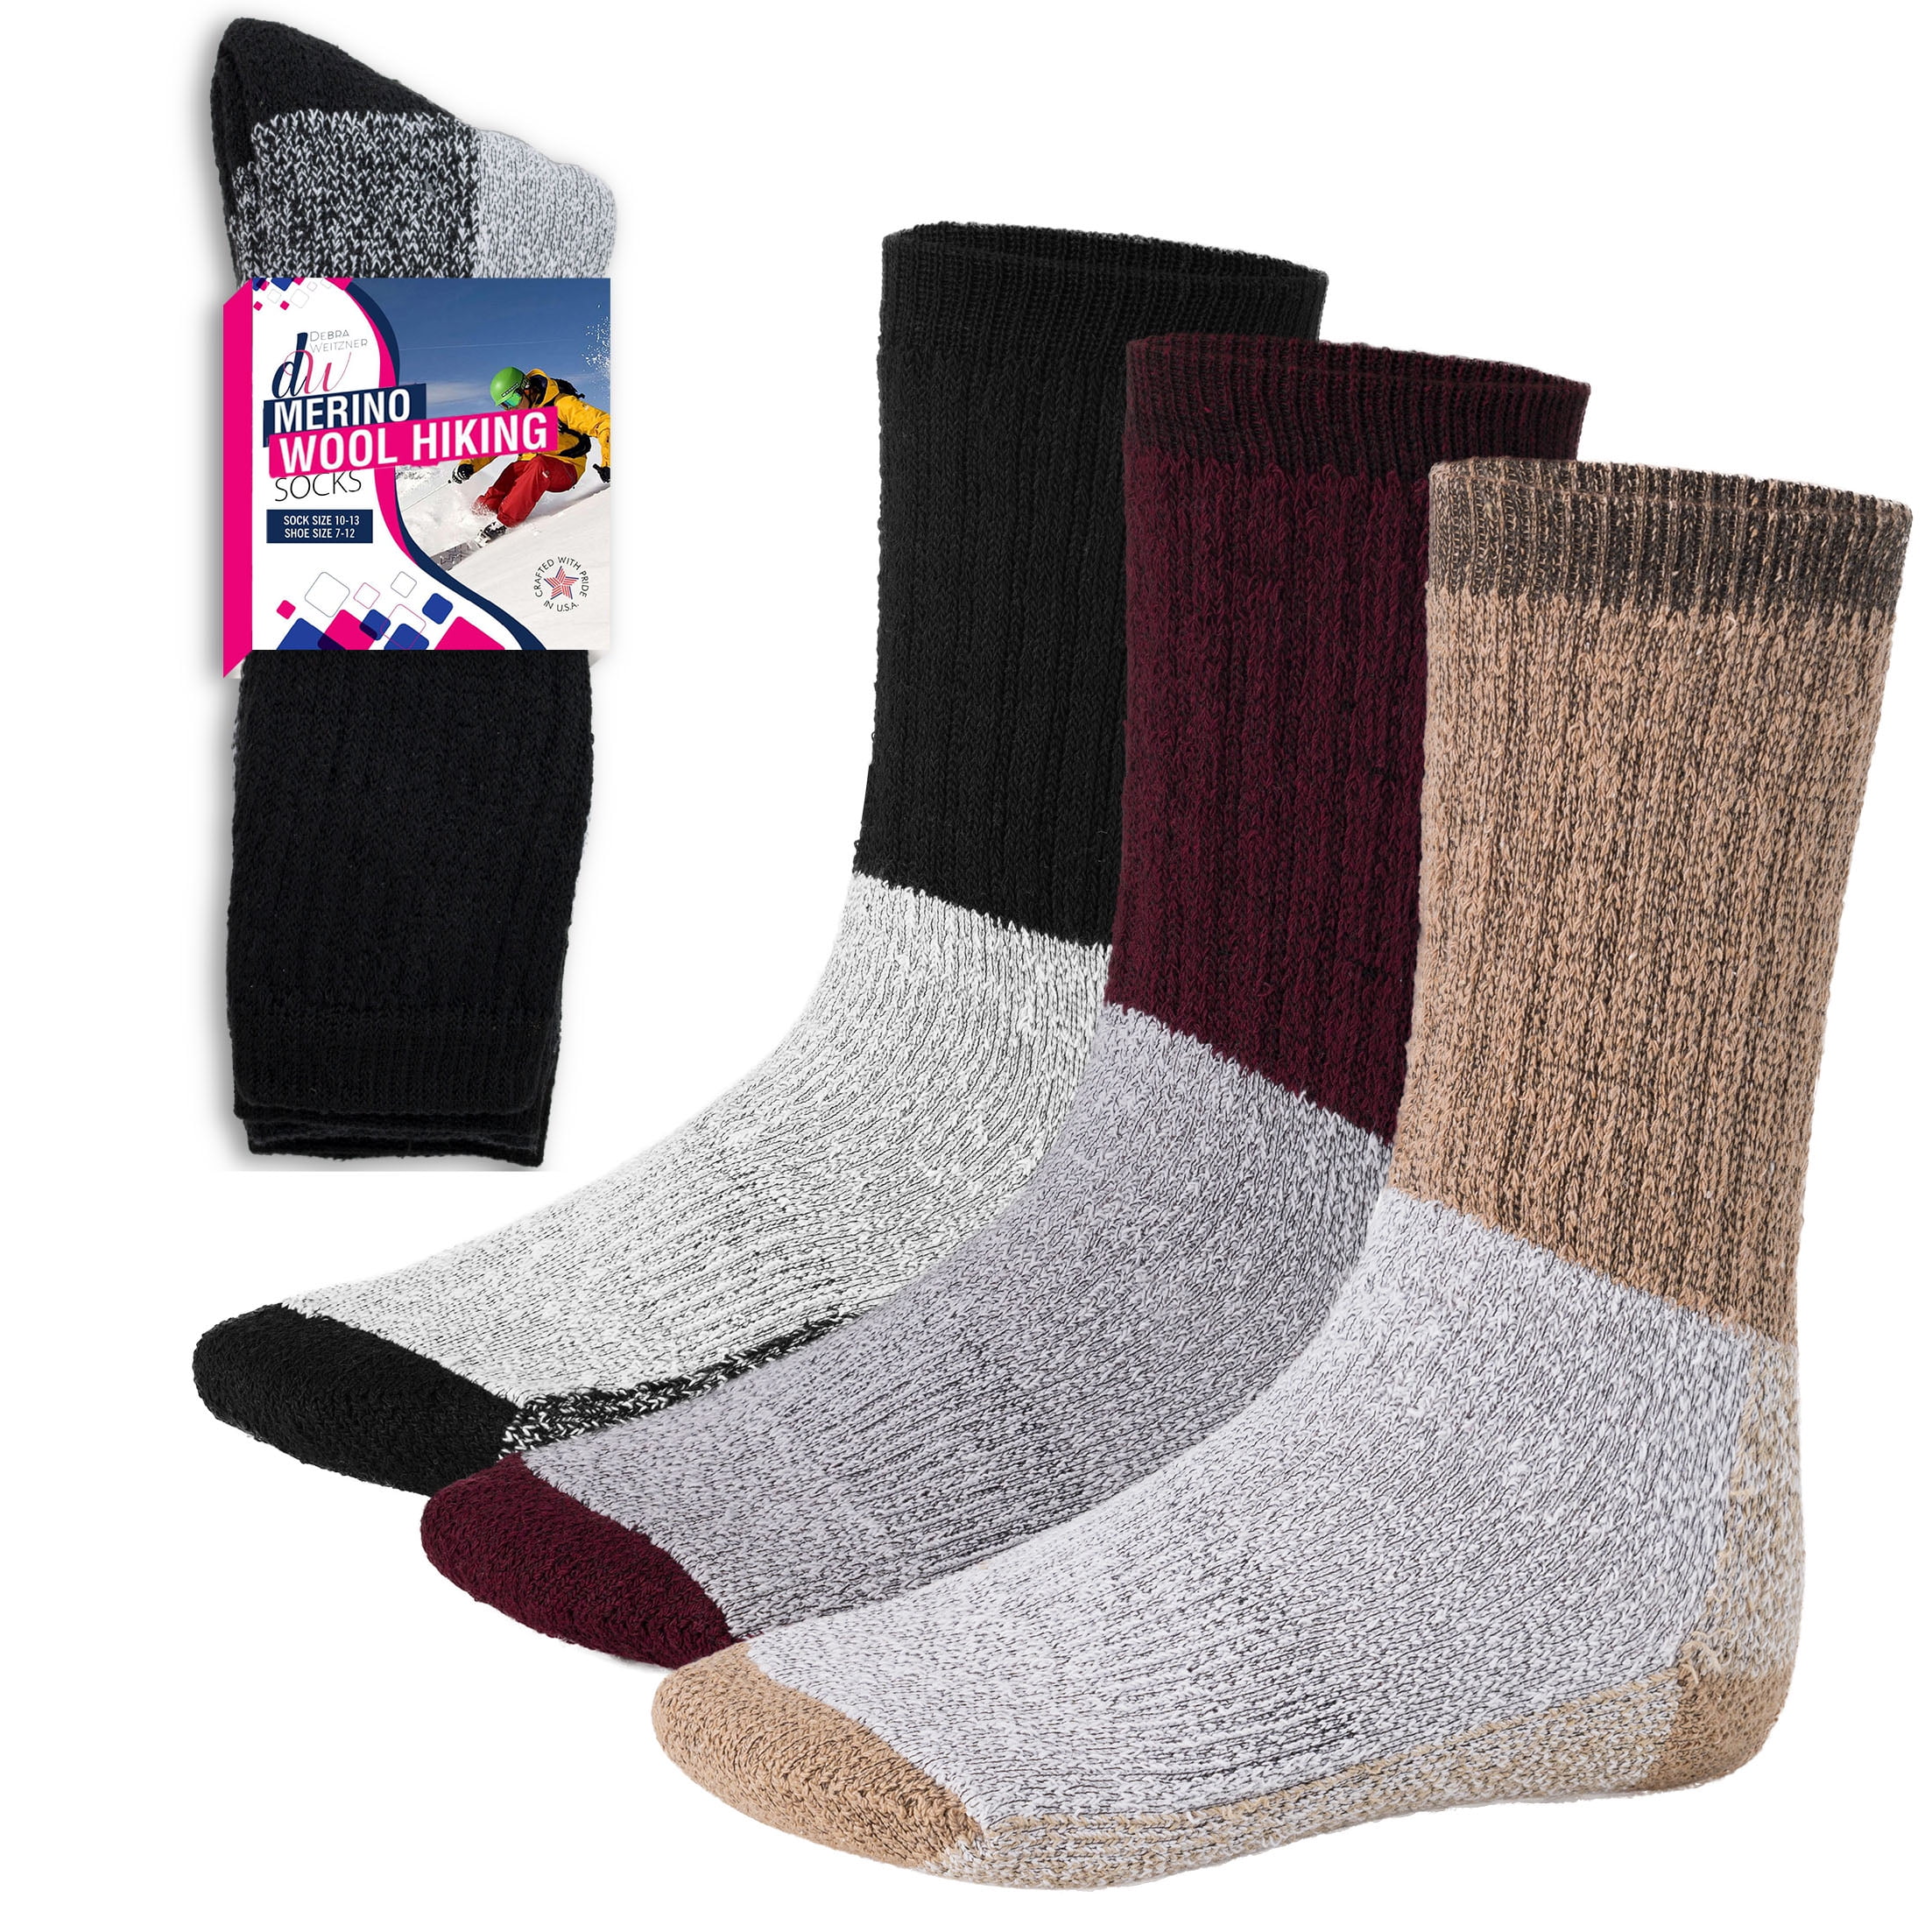 Heavy Duty Ladies Thermal Socks Hiking Boot Socks Thick Winter Warm Adults UK